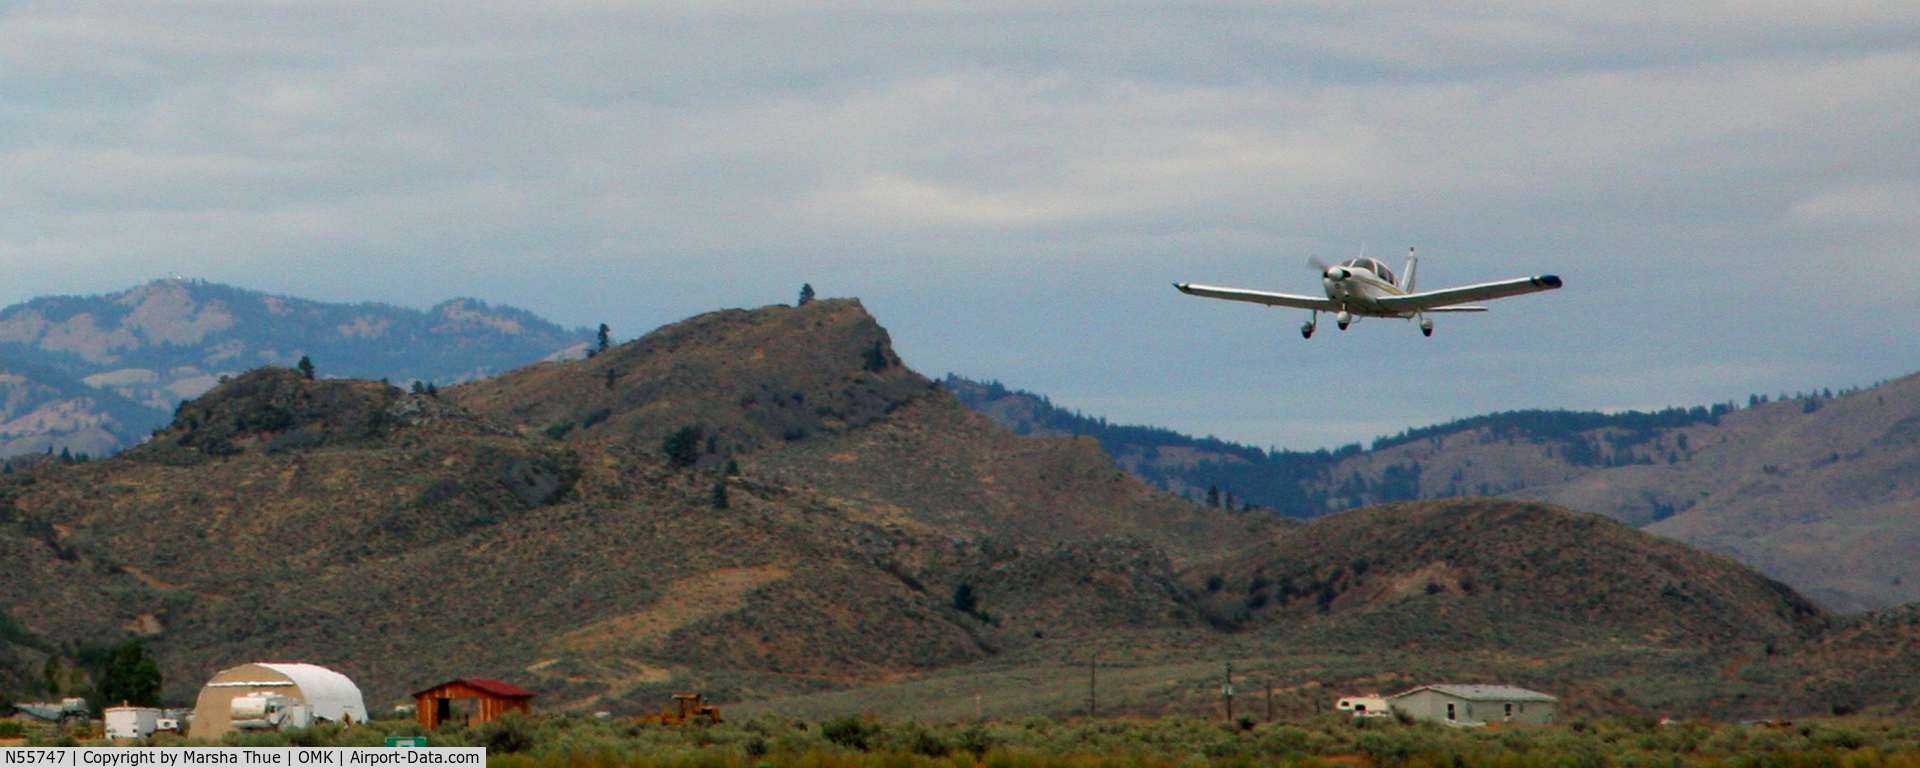 N55747, 1973 Piper PA-28-180 Cherokee C/N 28-7305347, Leaving Omak, 9/6/2010 12:58pm. Cannon EOS 40D.